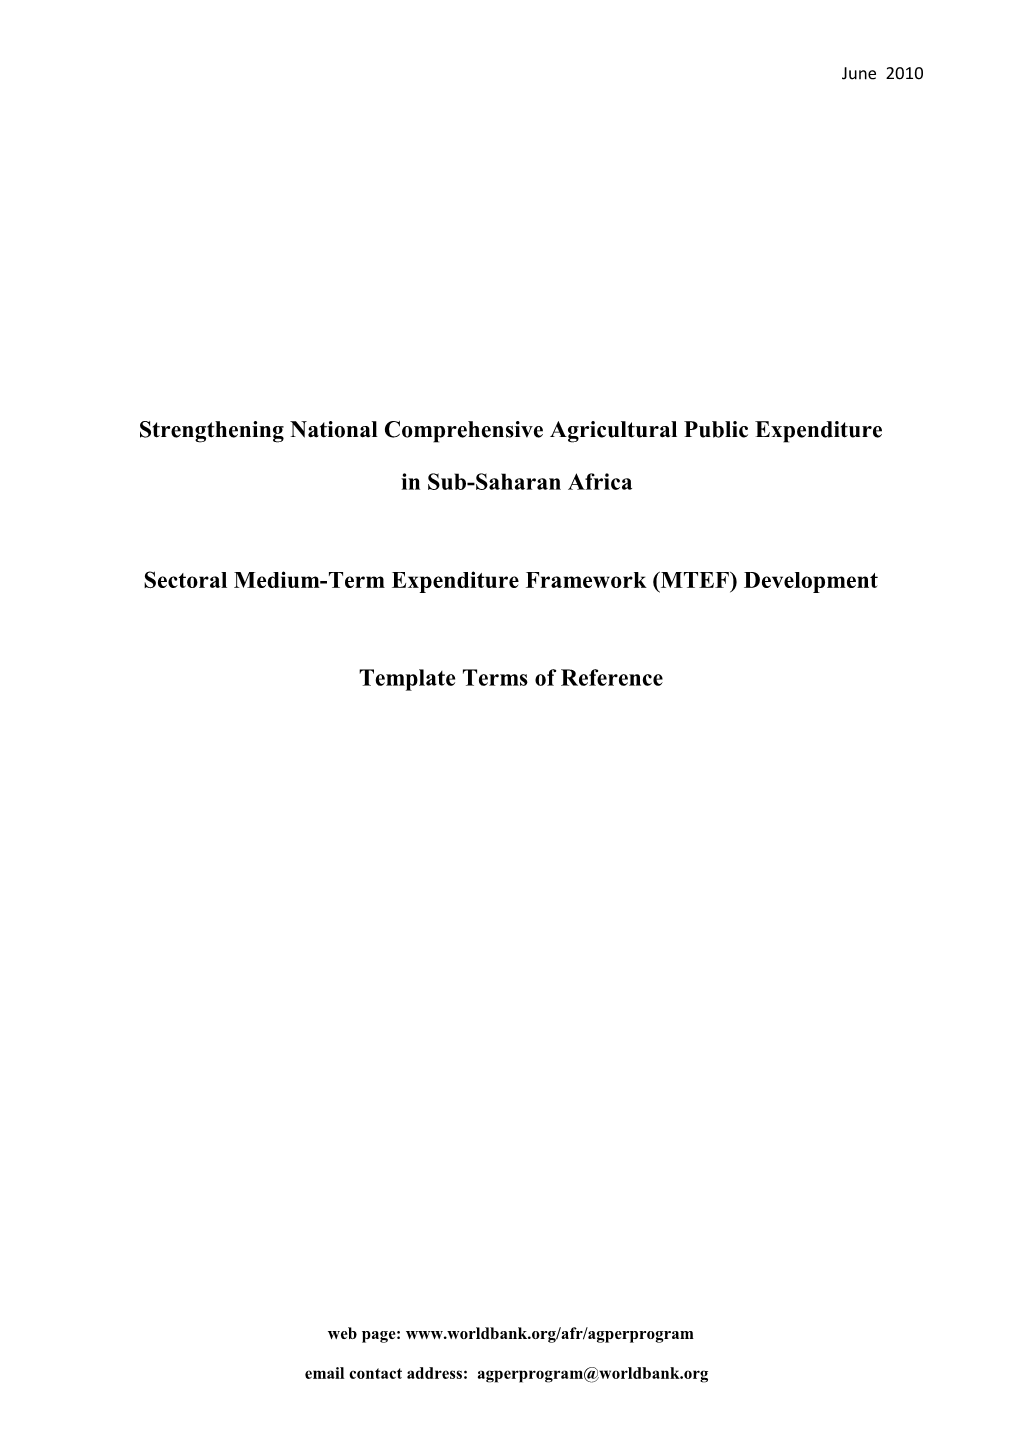 Strengthening National Comprehensive Agricultural Public Expenditure